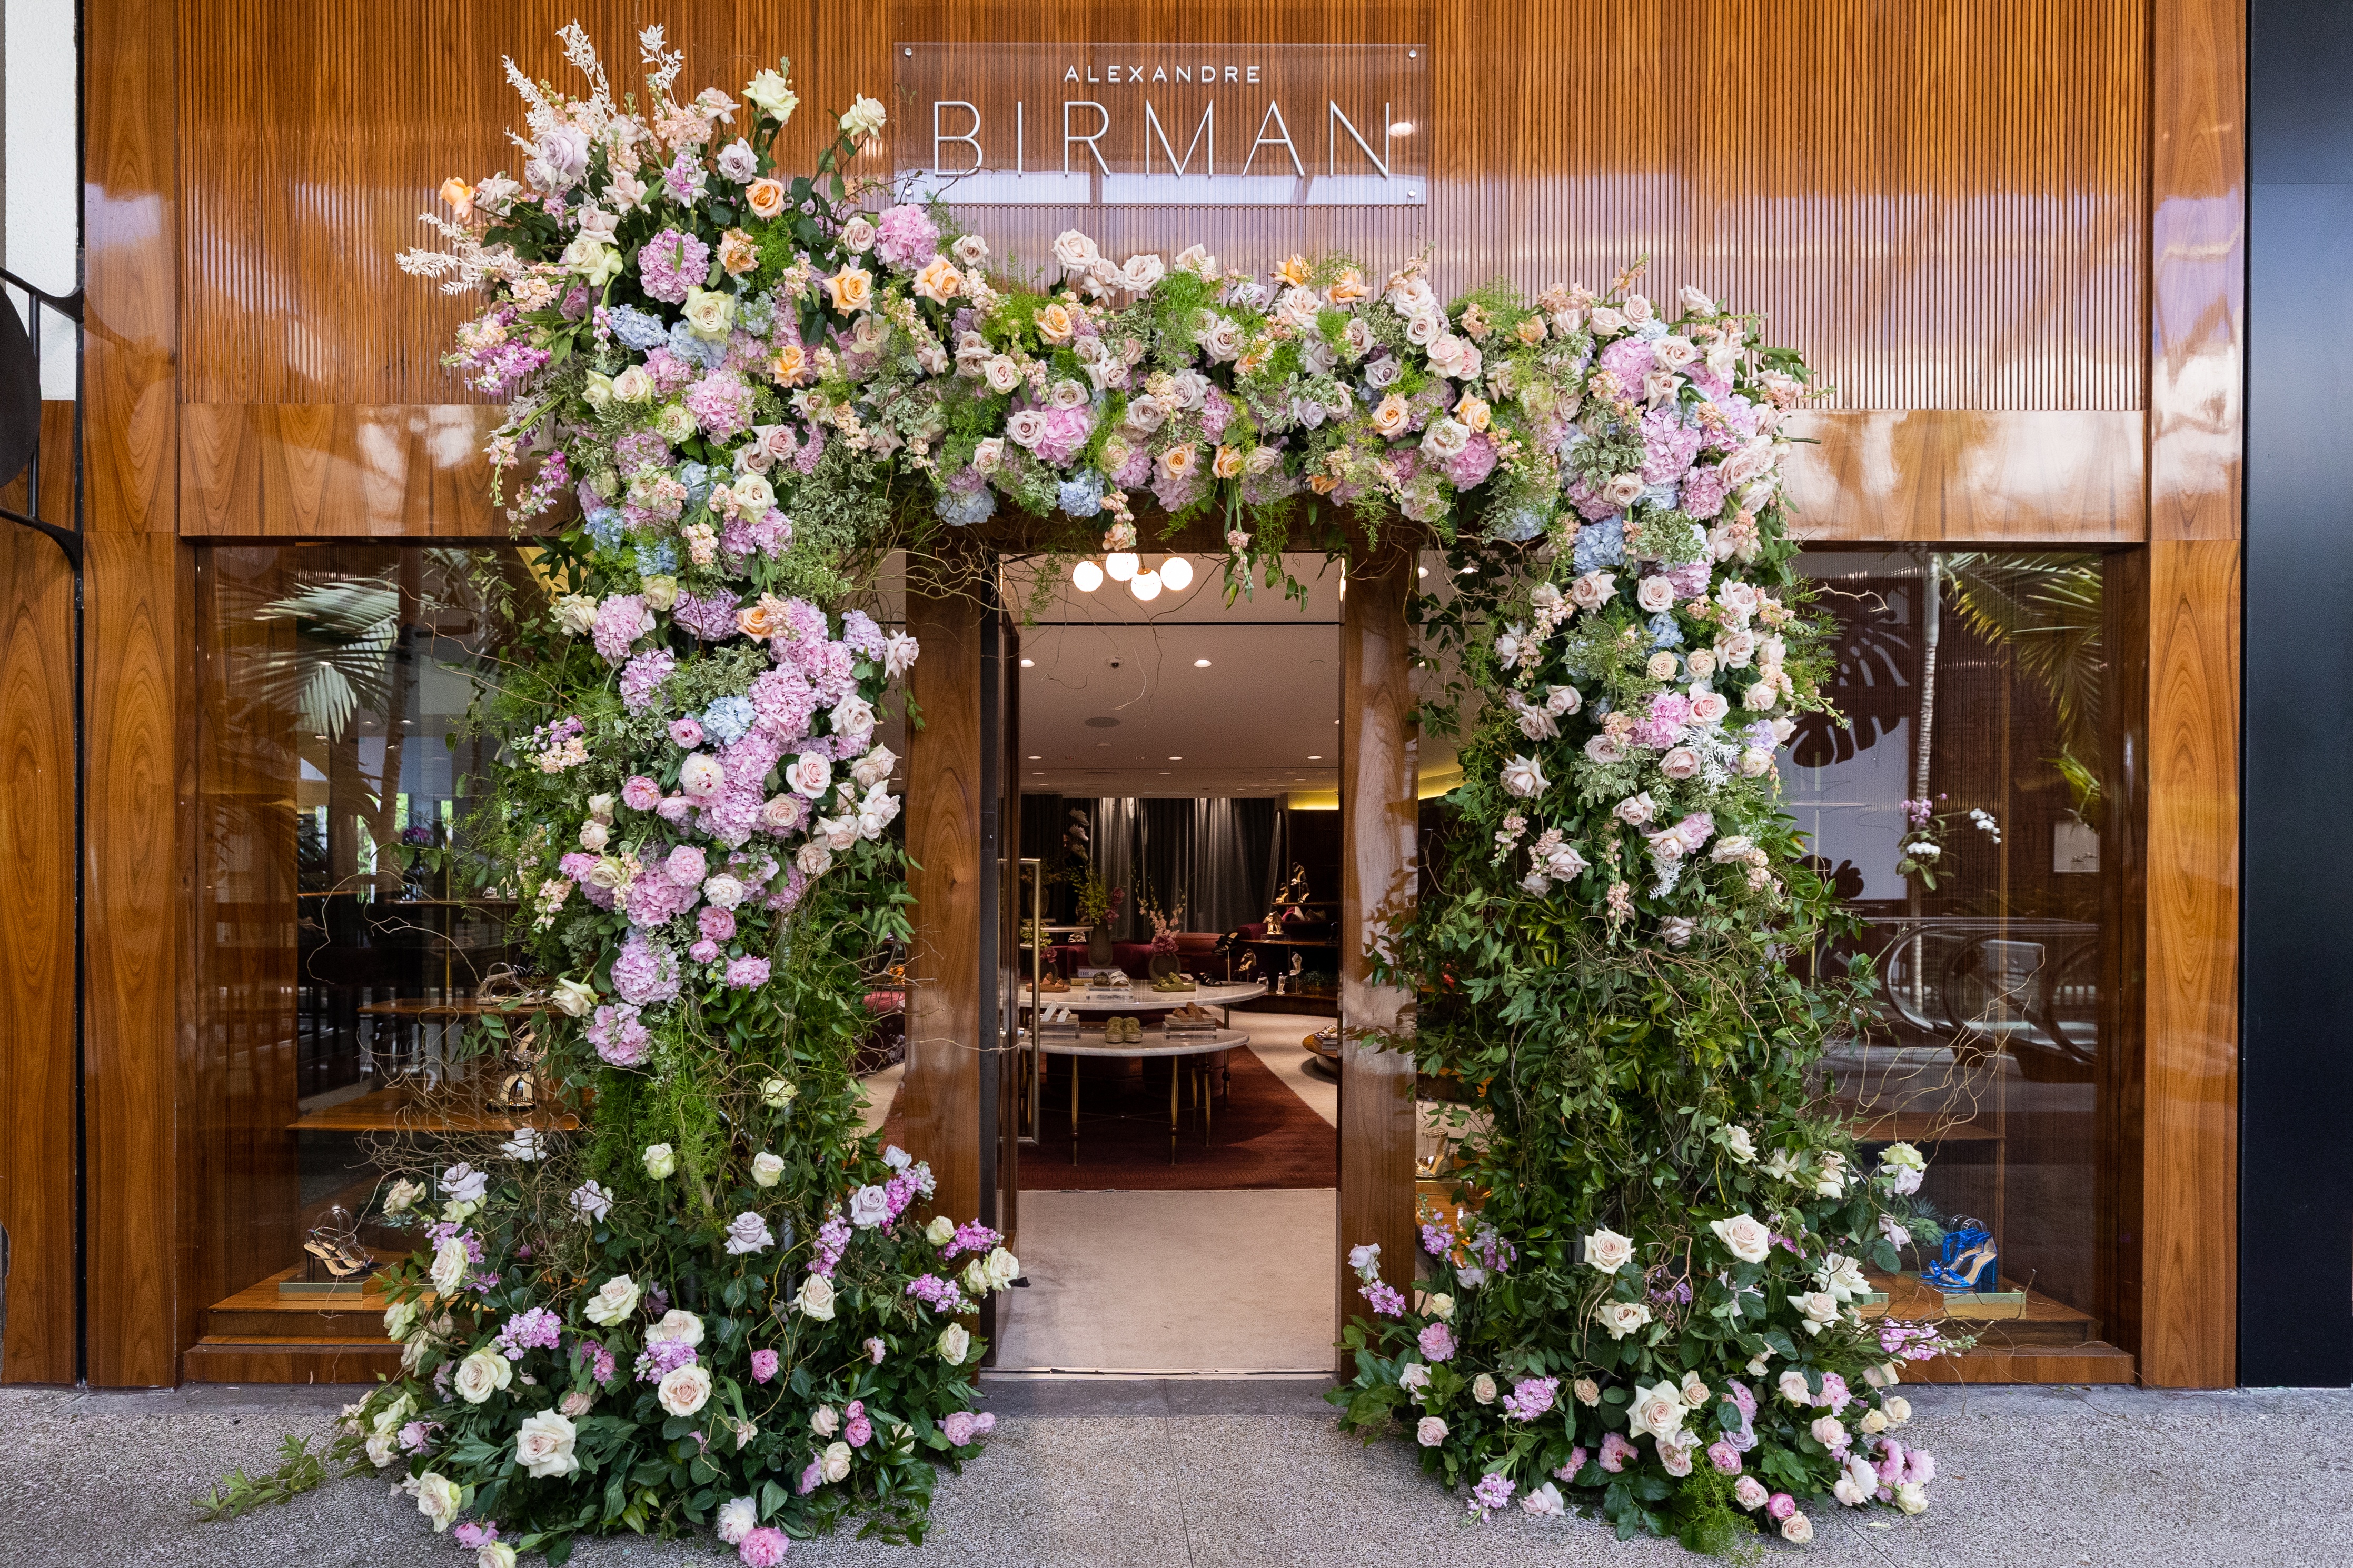 floral installation on Alexandre Birman doorway